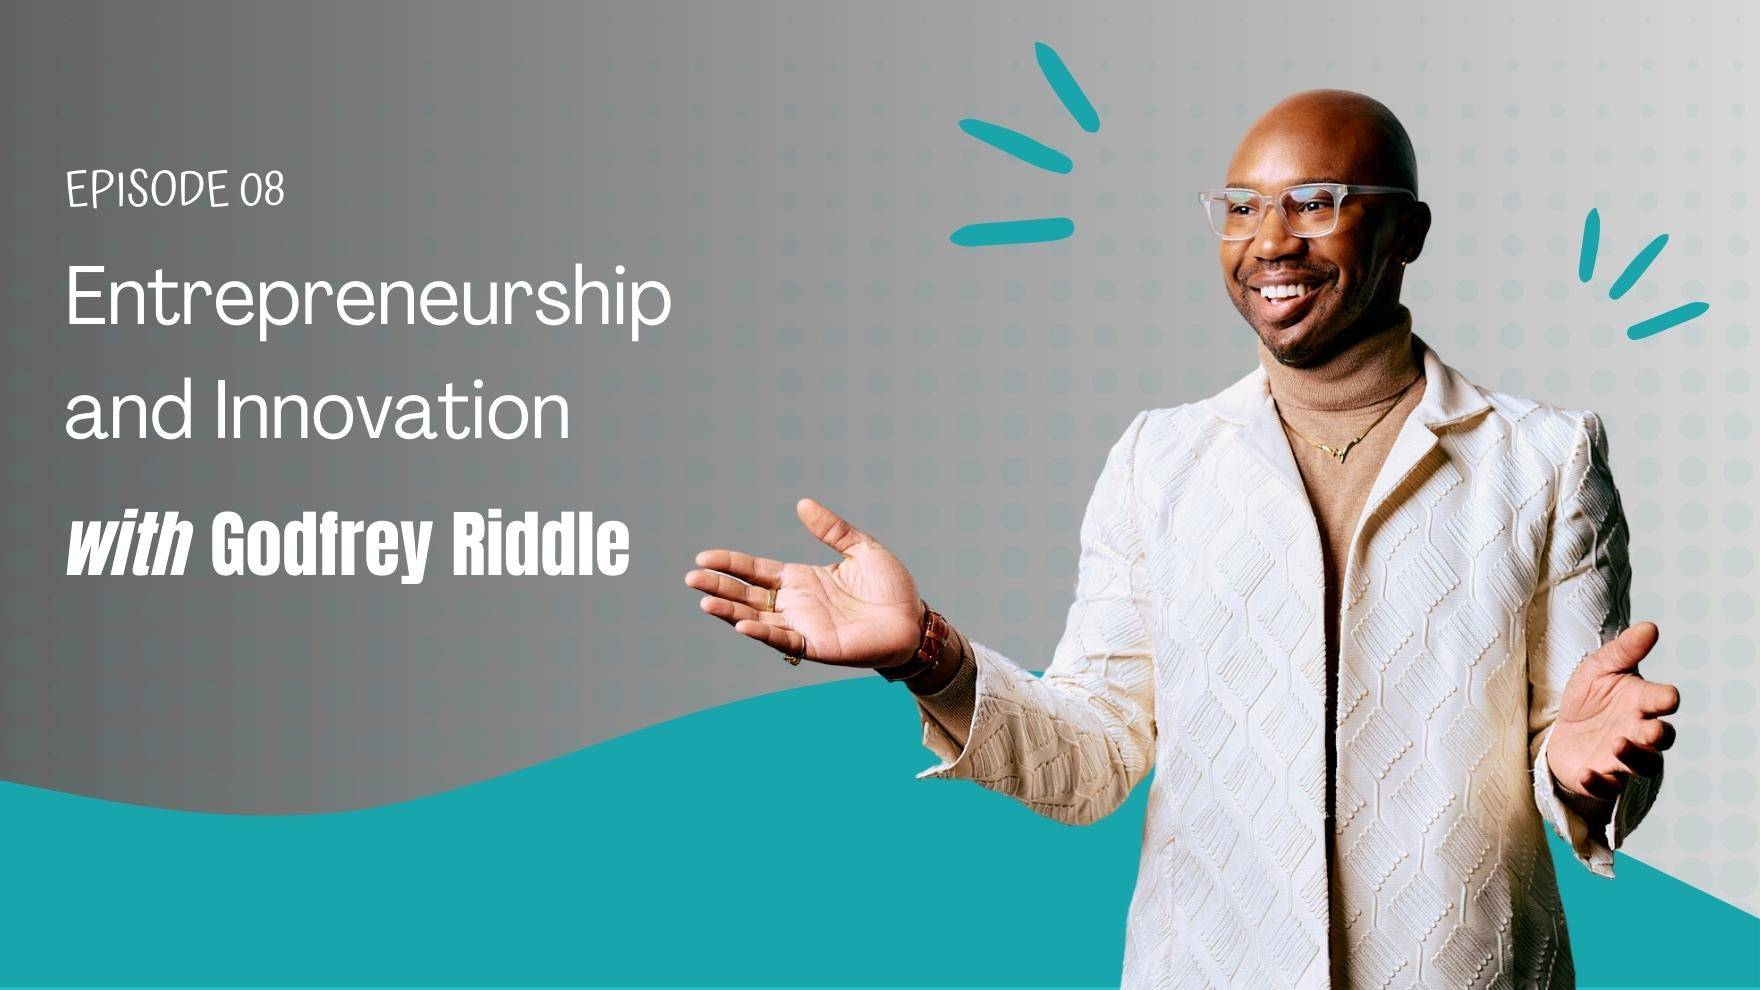 Entrepreneurship and Innovation with Godfrey Riddle